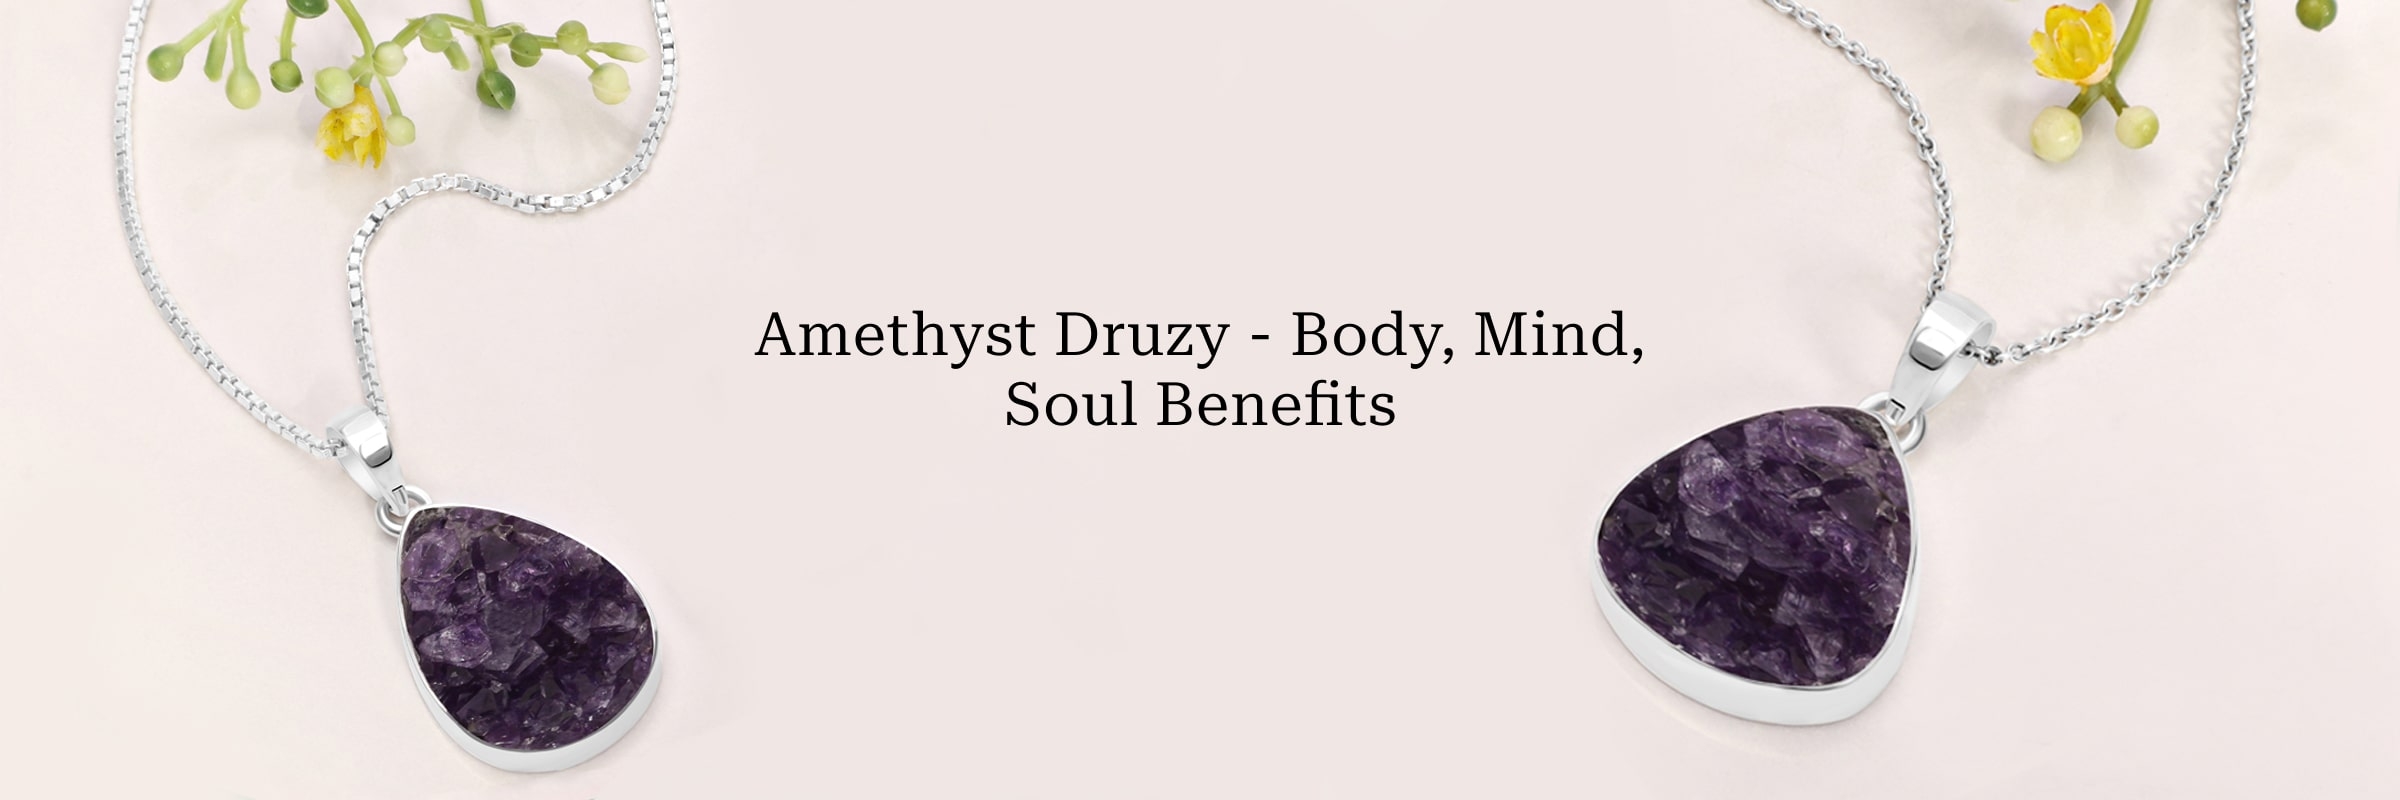 Benefits of Amethyst Druzy Crystal to Body, Mind & Soul